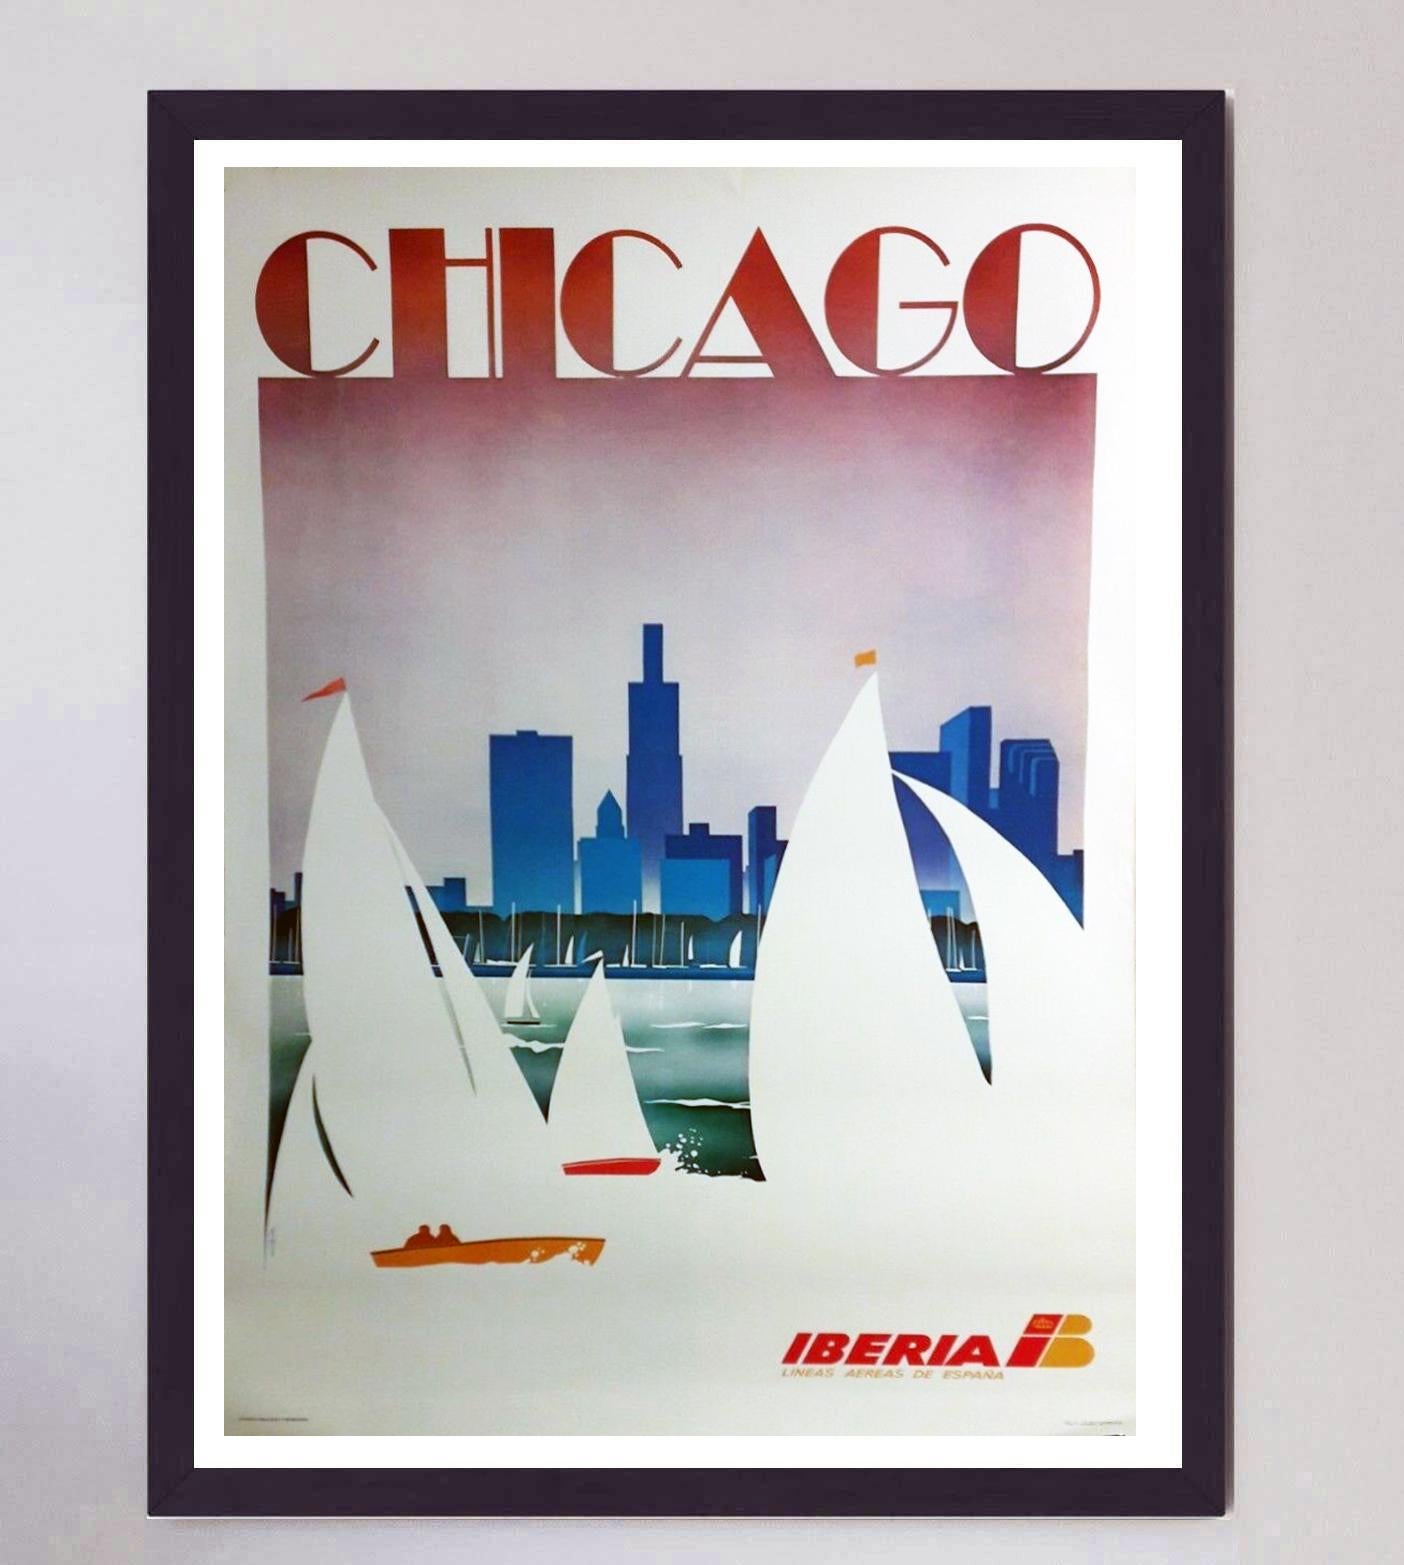 Late 20th Century 1987 Iberia - Chicago Original Vintage Poster